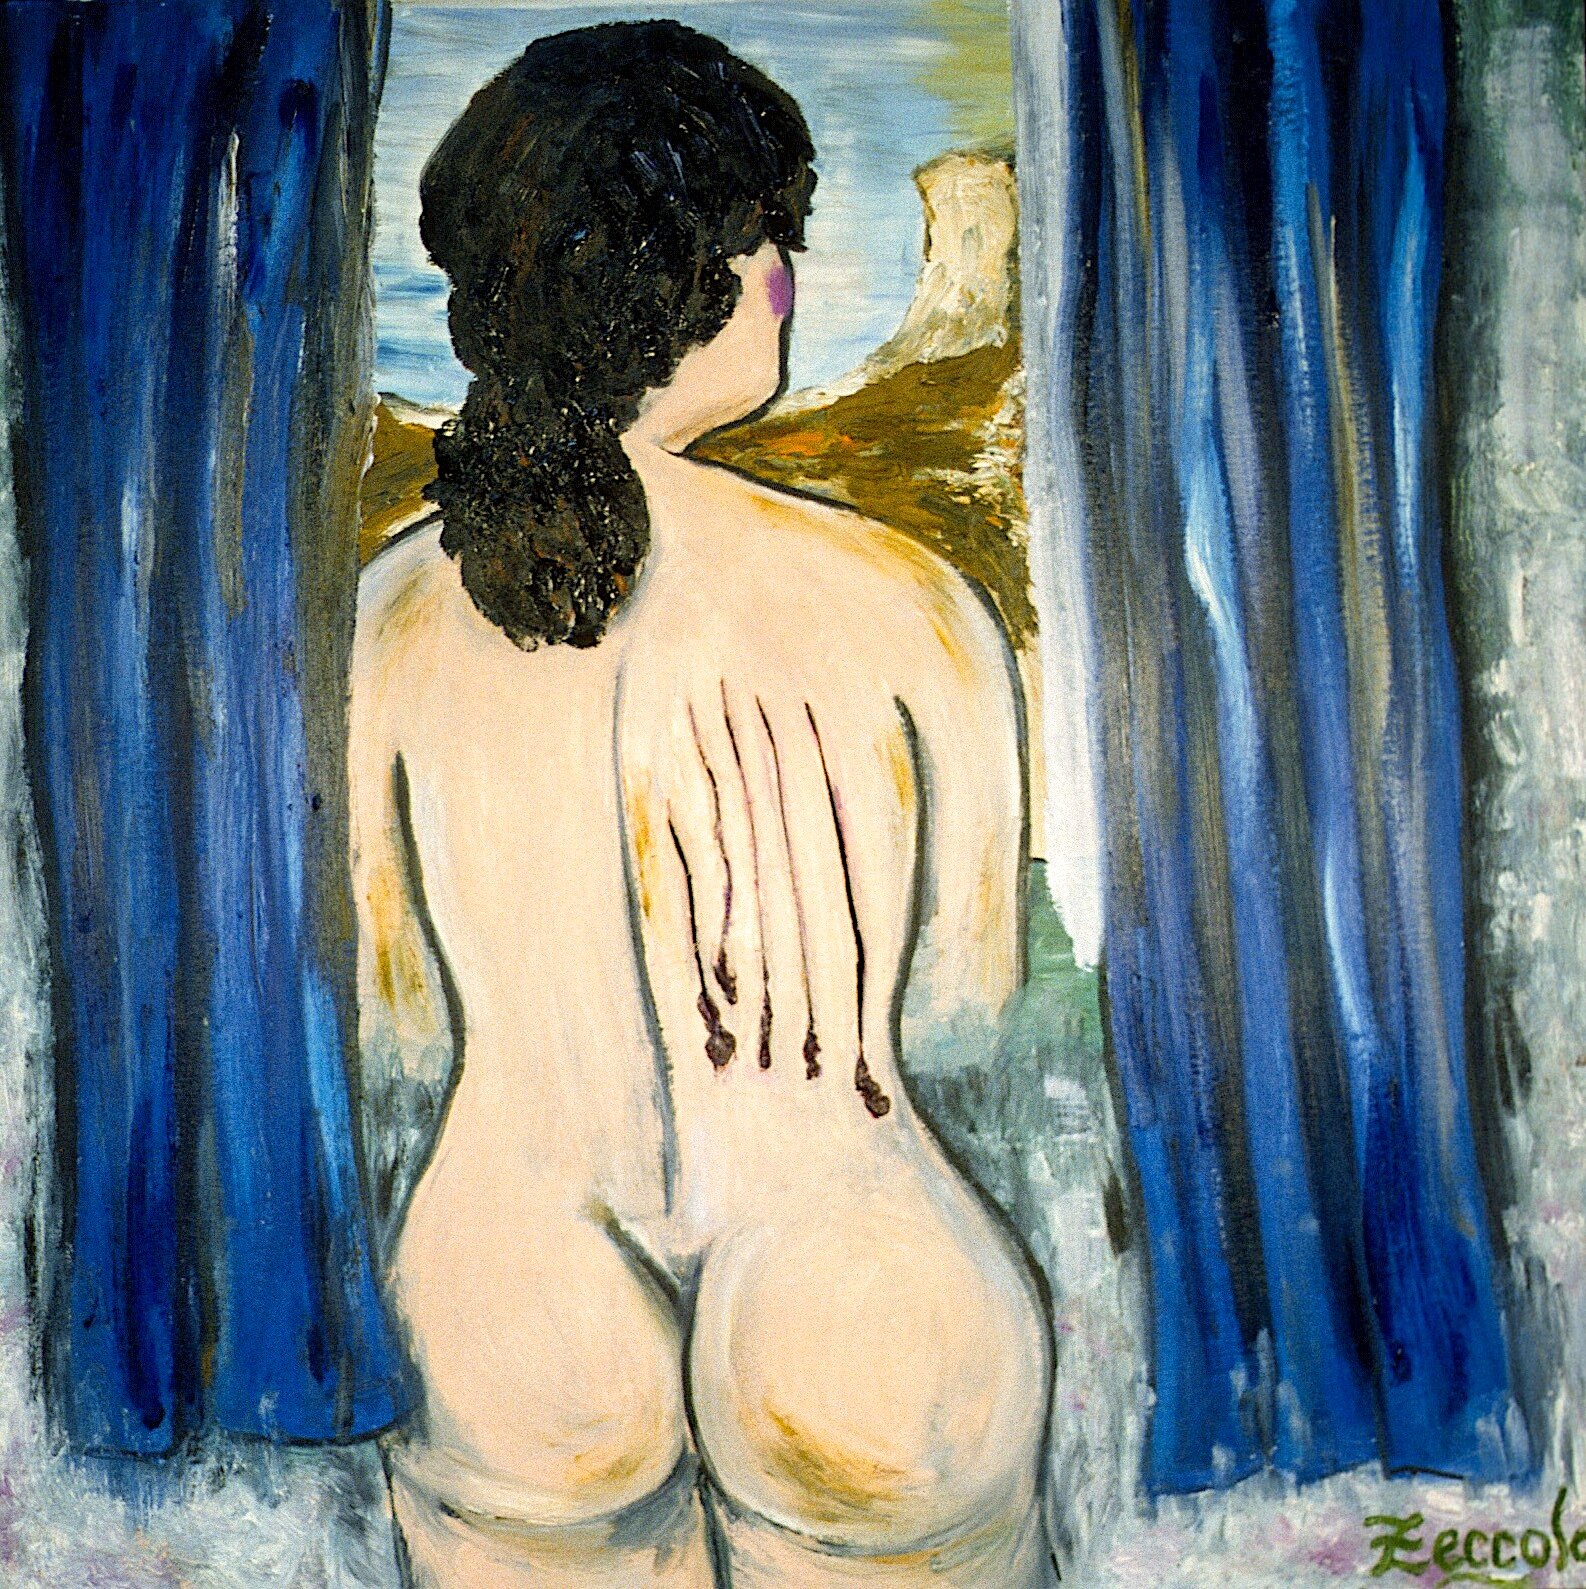 The Spanish Prisoner, 2004. Oil, acrylic on canvas. 38" x 38”.